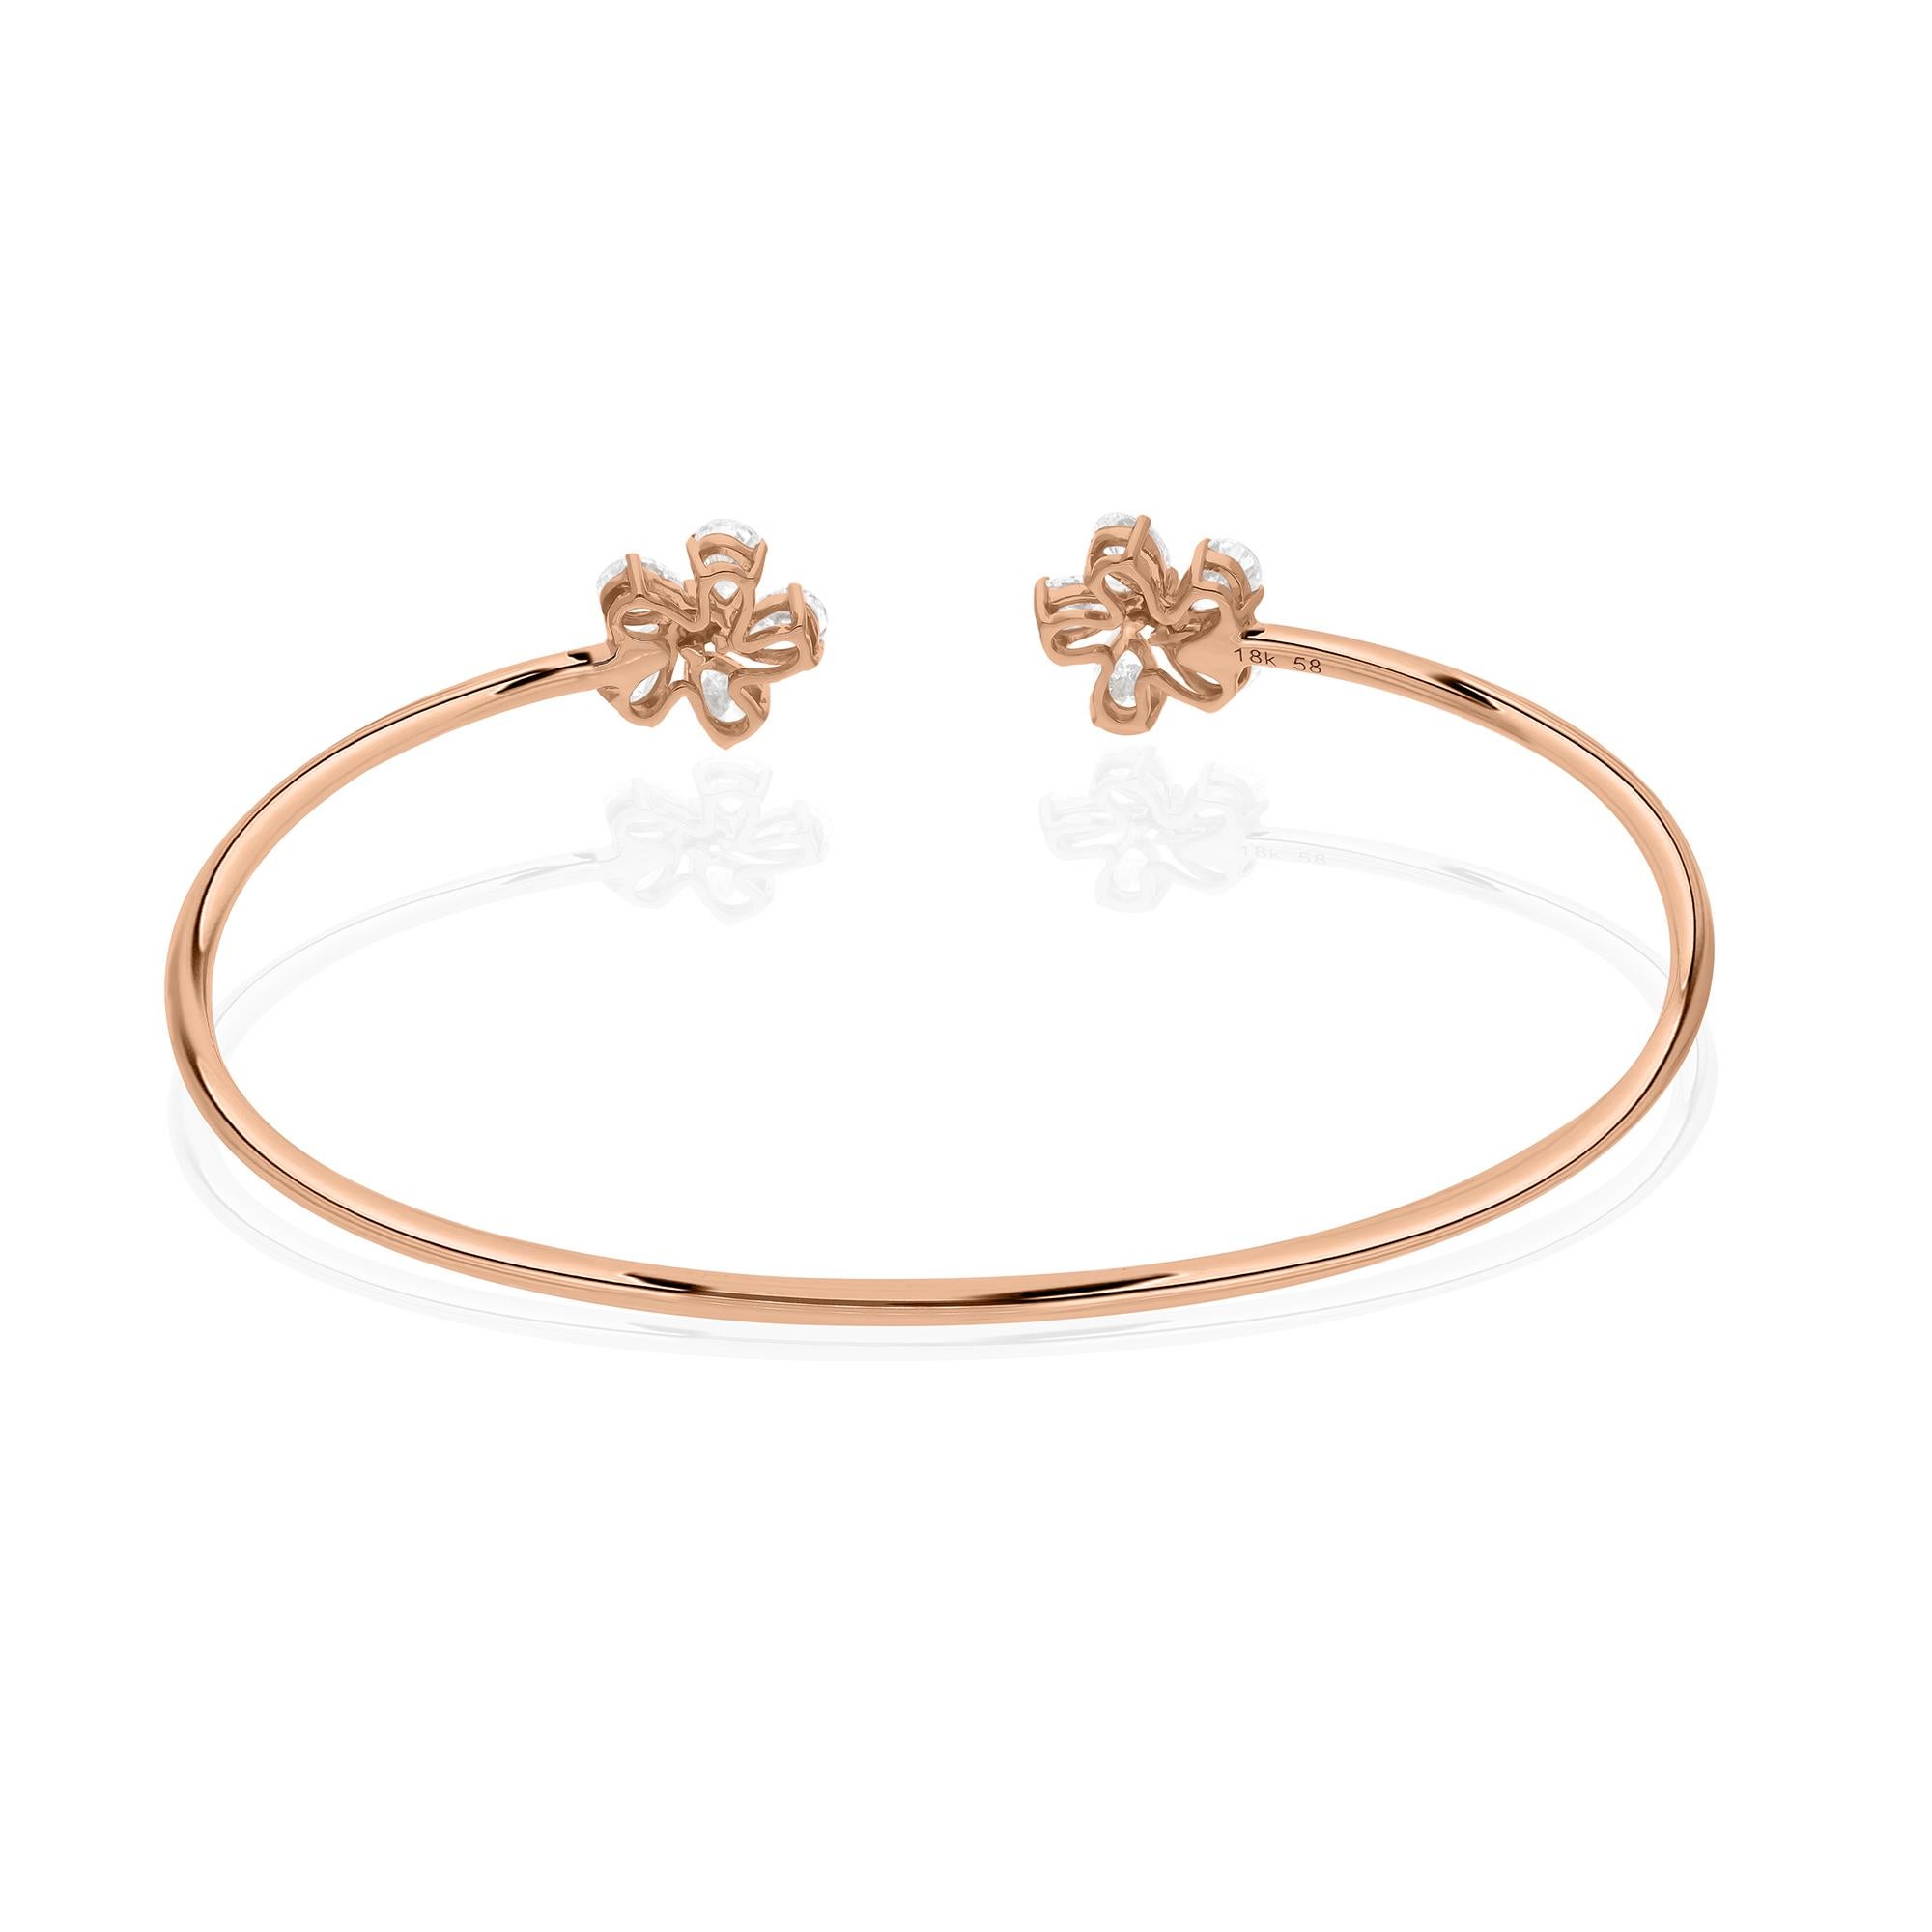 SI Clarity HI Color Round Diamond Flower Cuff Bangle Bracelet 18 Karat Rose Gold For Sale 1